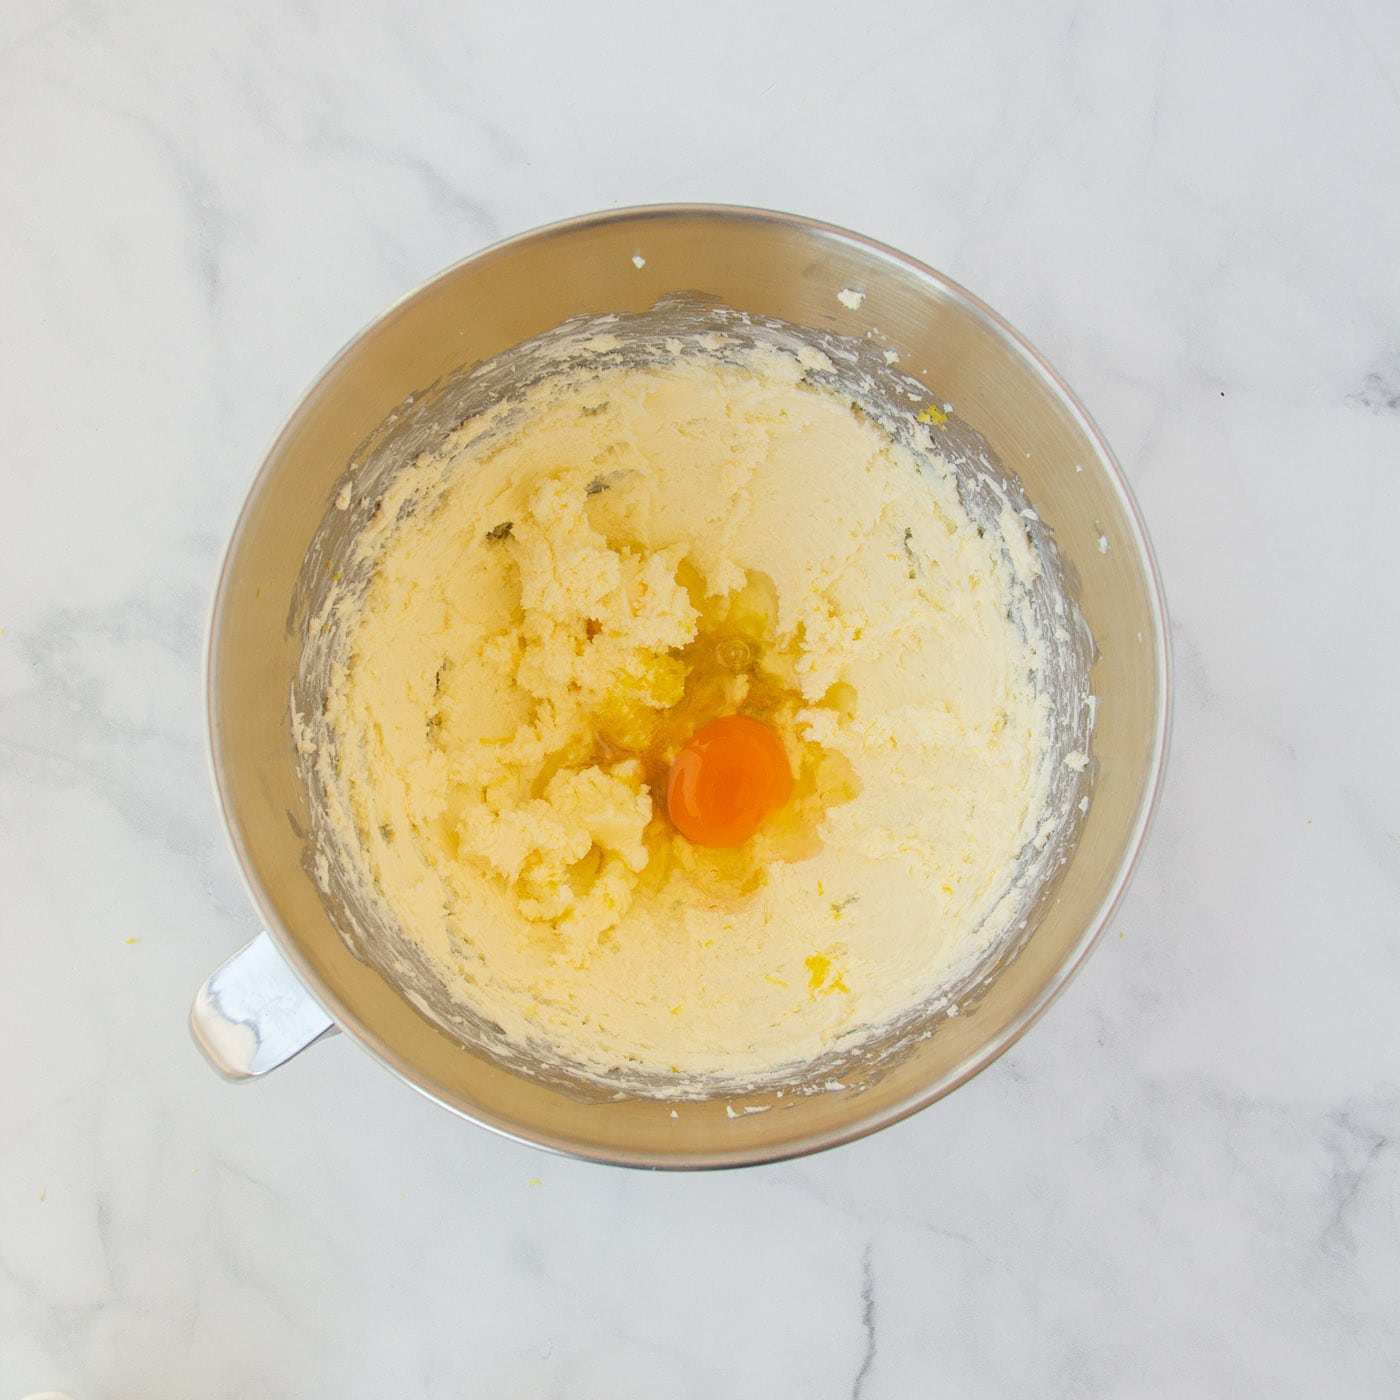 lemon juice, egg, and lemon zest added to cream cheese mixture